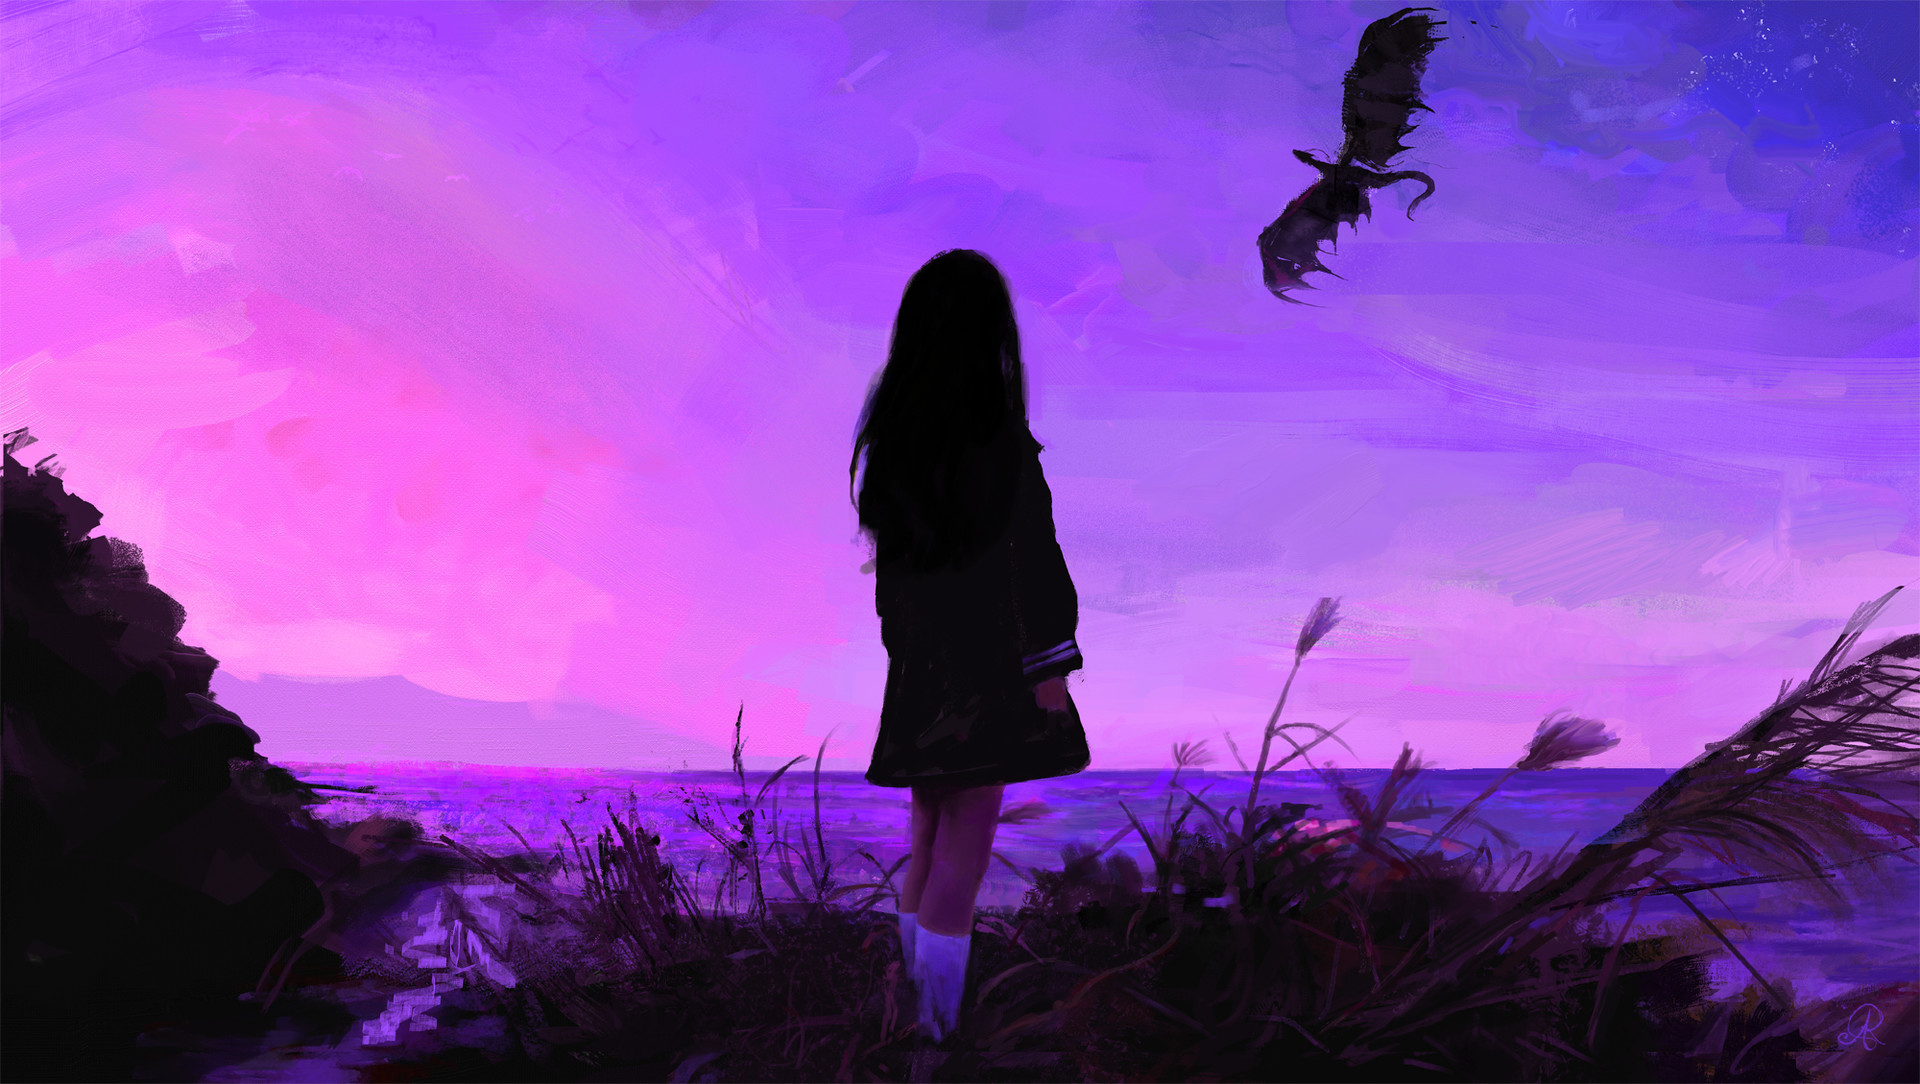 Девушка на фоне фиолетового заборчика